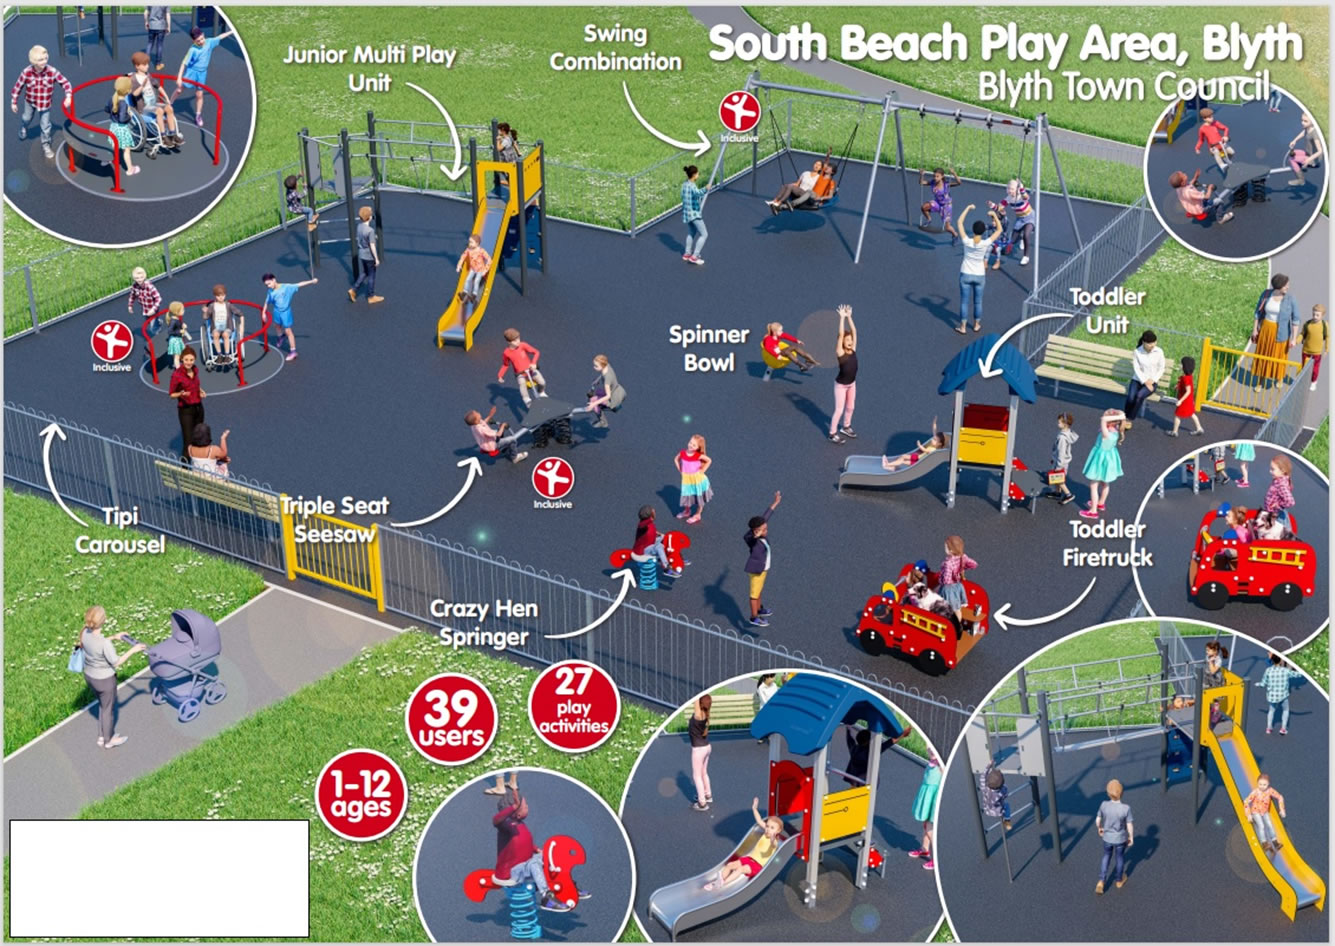 South Beach Play Area - Advance notice: